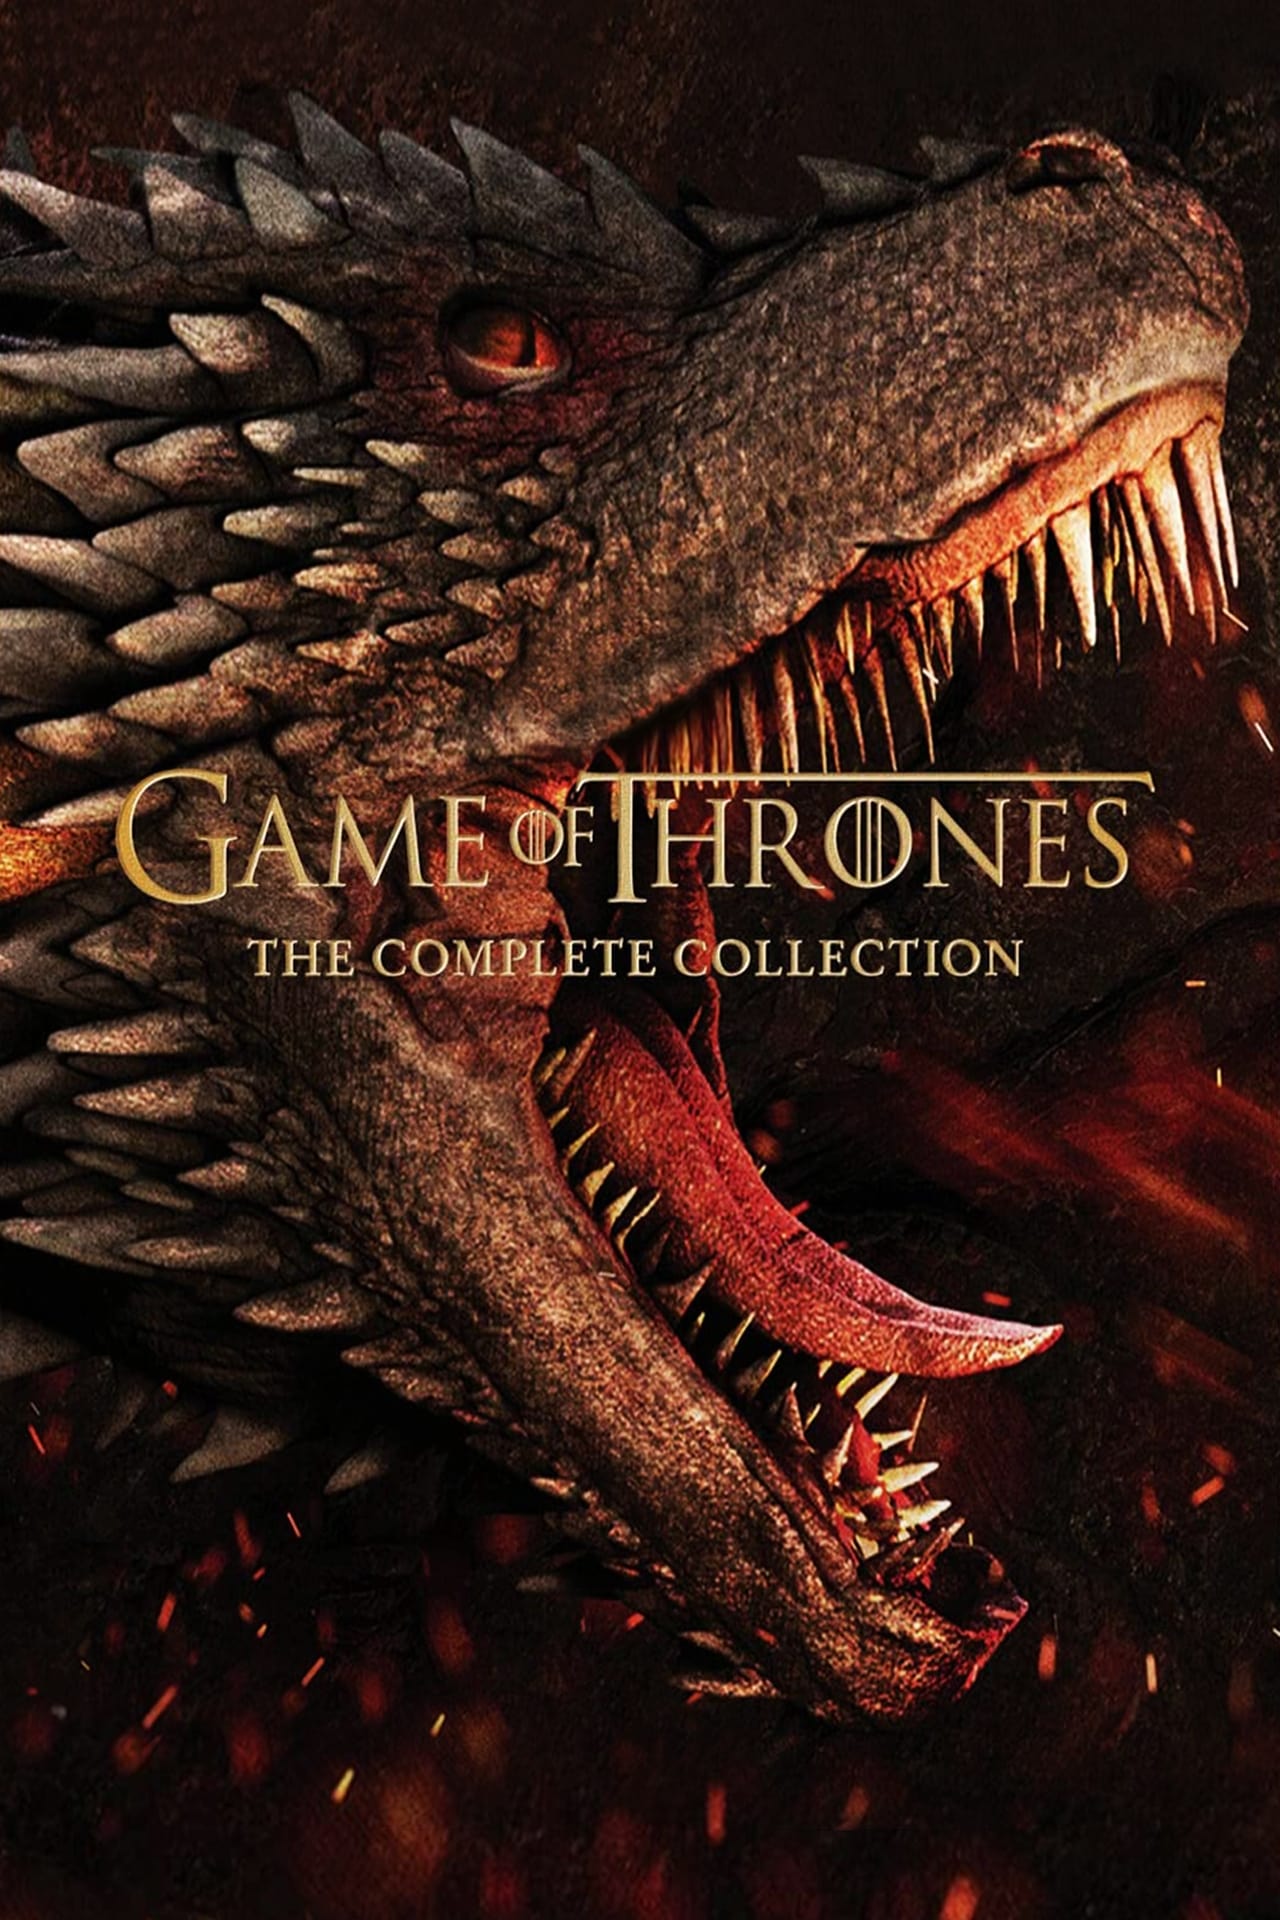 Game of Thrones (2013) S3 EP01&EP10 224Kbps 23.976Fps 48Khz 2.0Ch DD+ AMZN E-AC3 Turkish Audio TAC